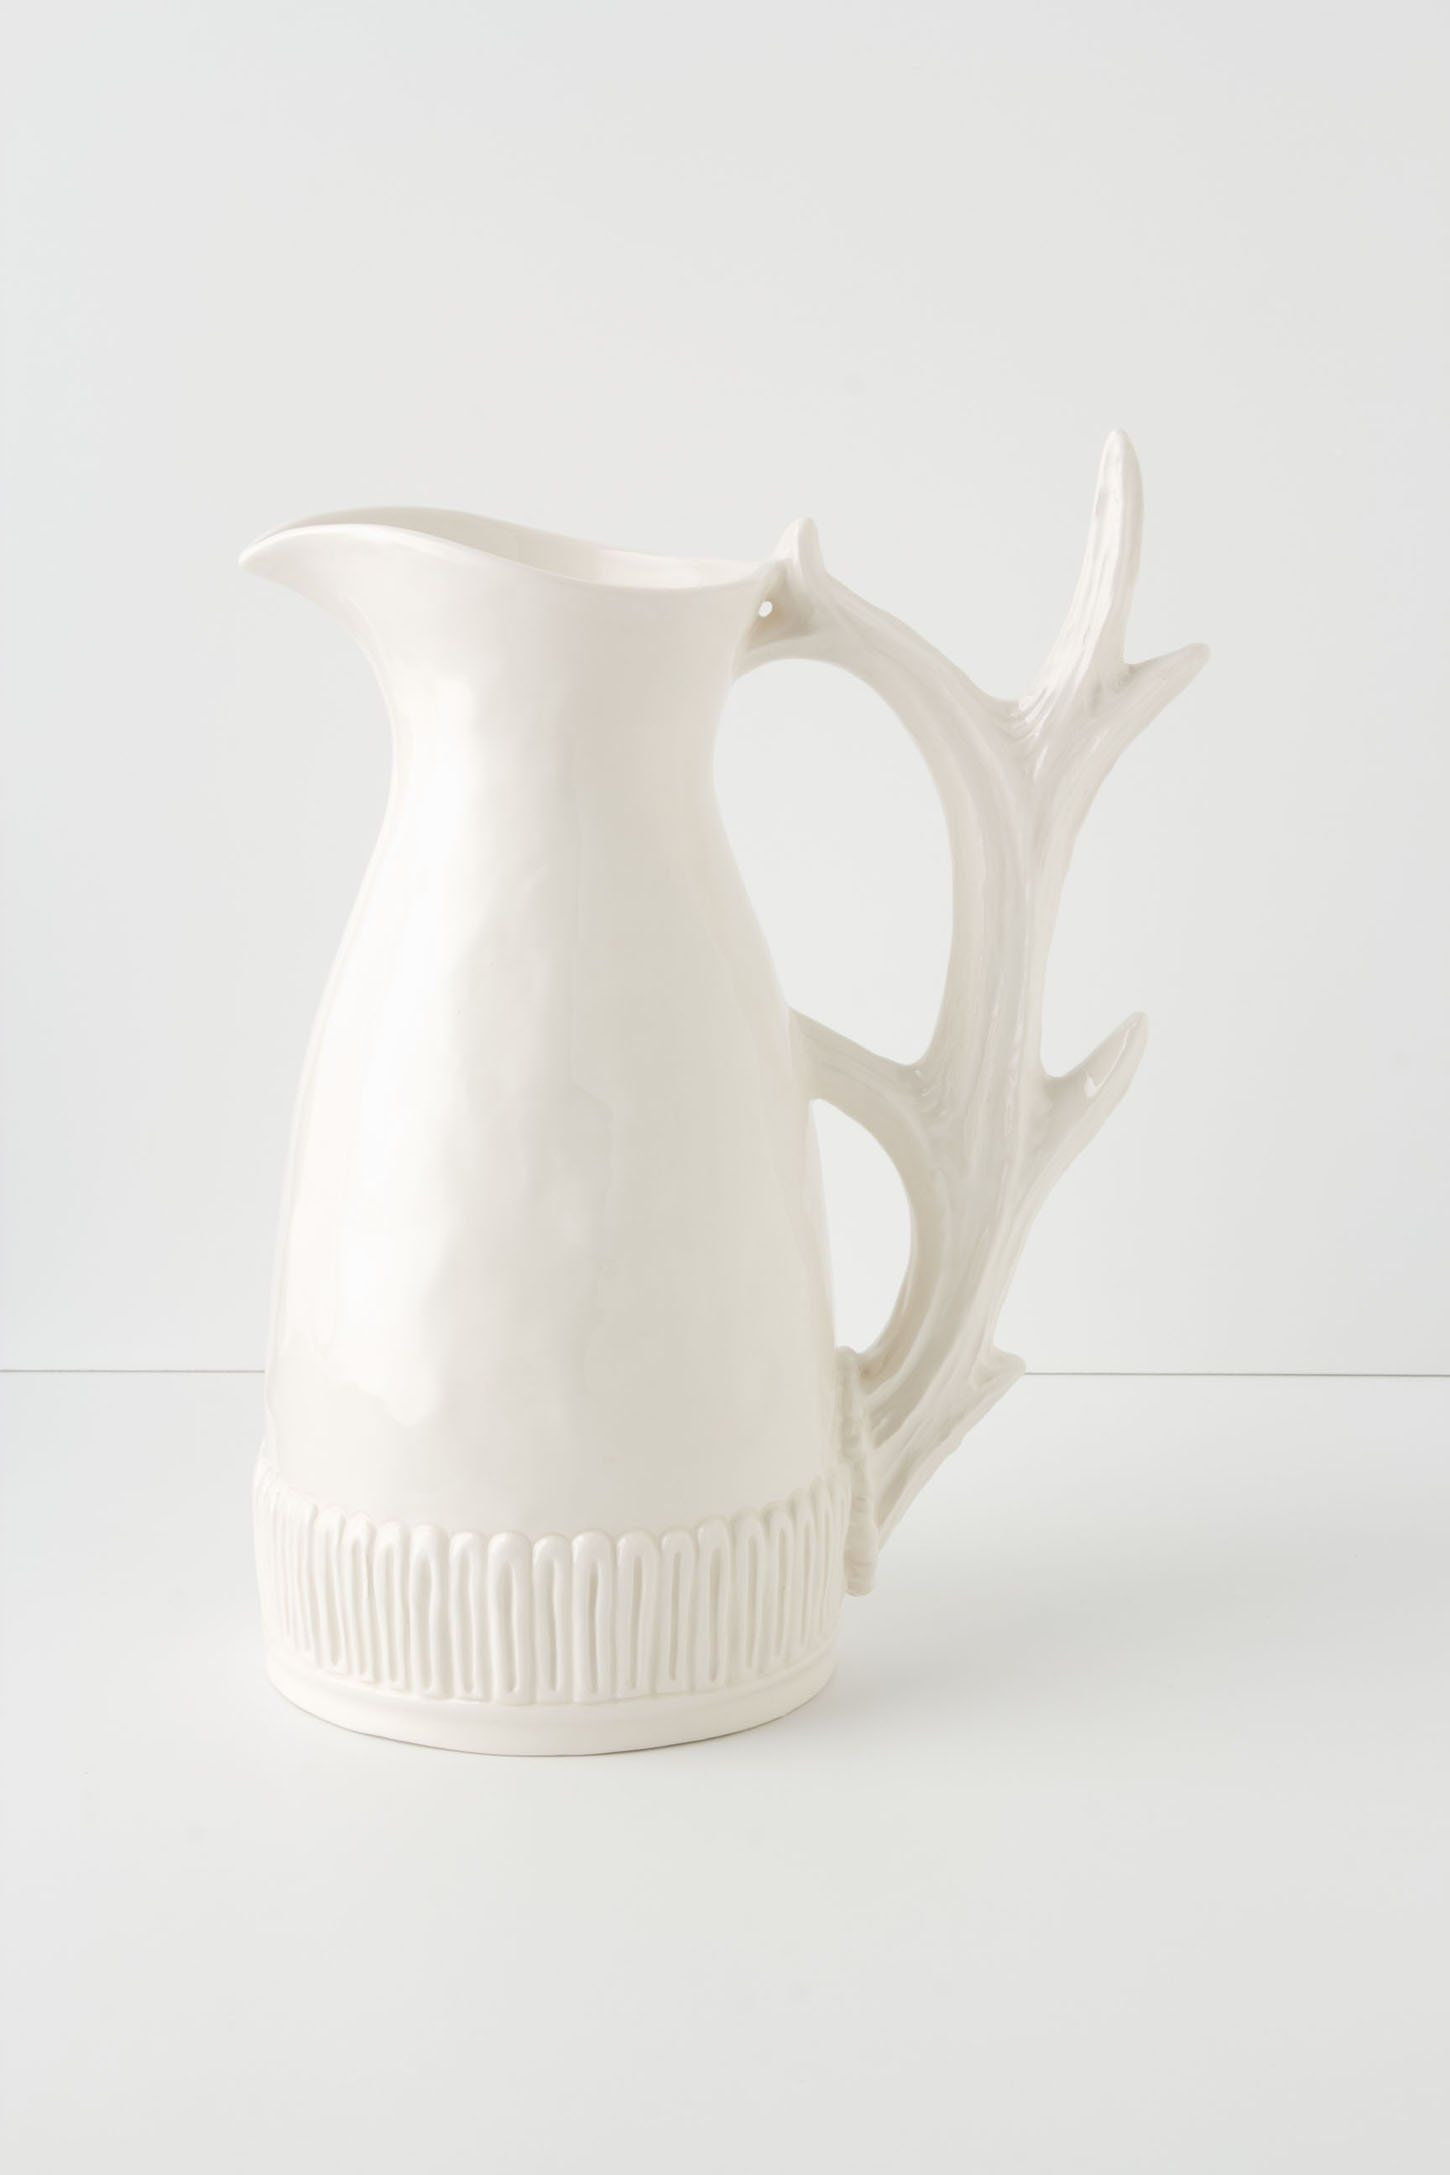 25 Stunning Kate Spade Owl Vase 2024 free download kate spade owl vase of surroyal pitcher anthropologie com 78 whats need got to do regarding interiors